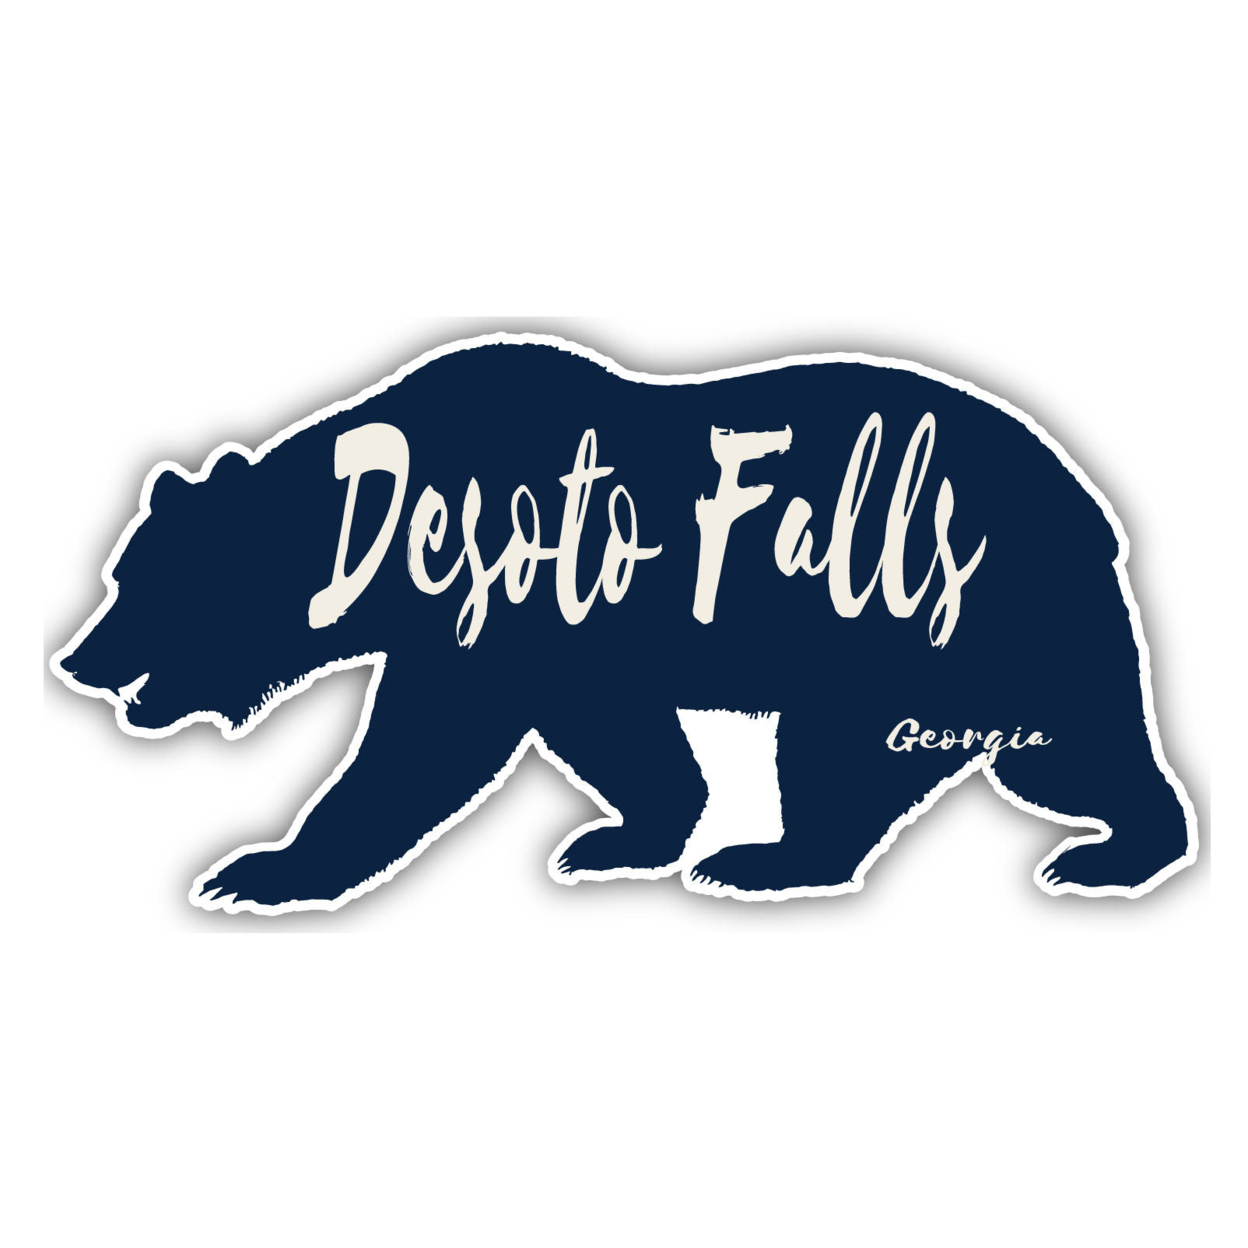 DeSoto Falls Georgia Souvenir Decorative Stickers (Choose Theme And Size) - Single Unit, 8-Inch, Bear